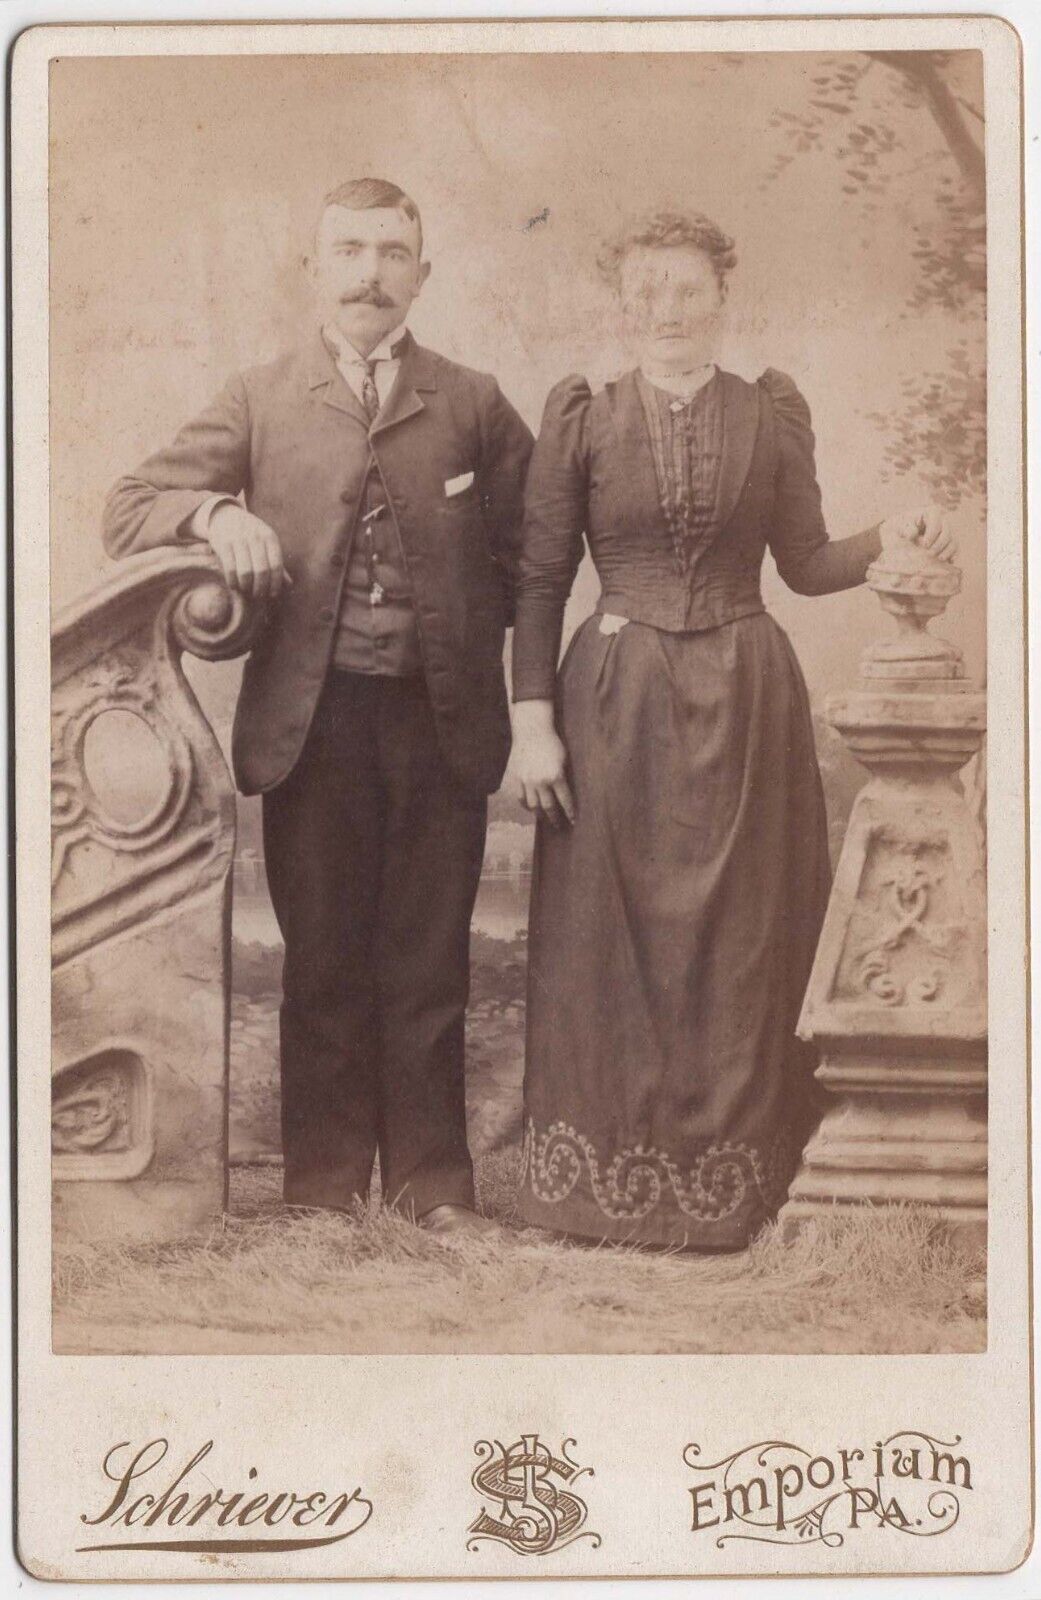 CIRCA 1890s CABINET CARD SCHRIEVER HUSBAND & WIFE ROMANTIC COUPLE EMPORIUM PA.